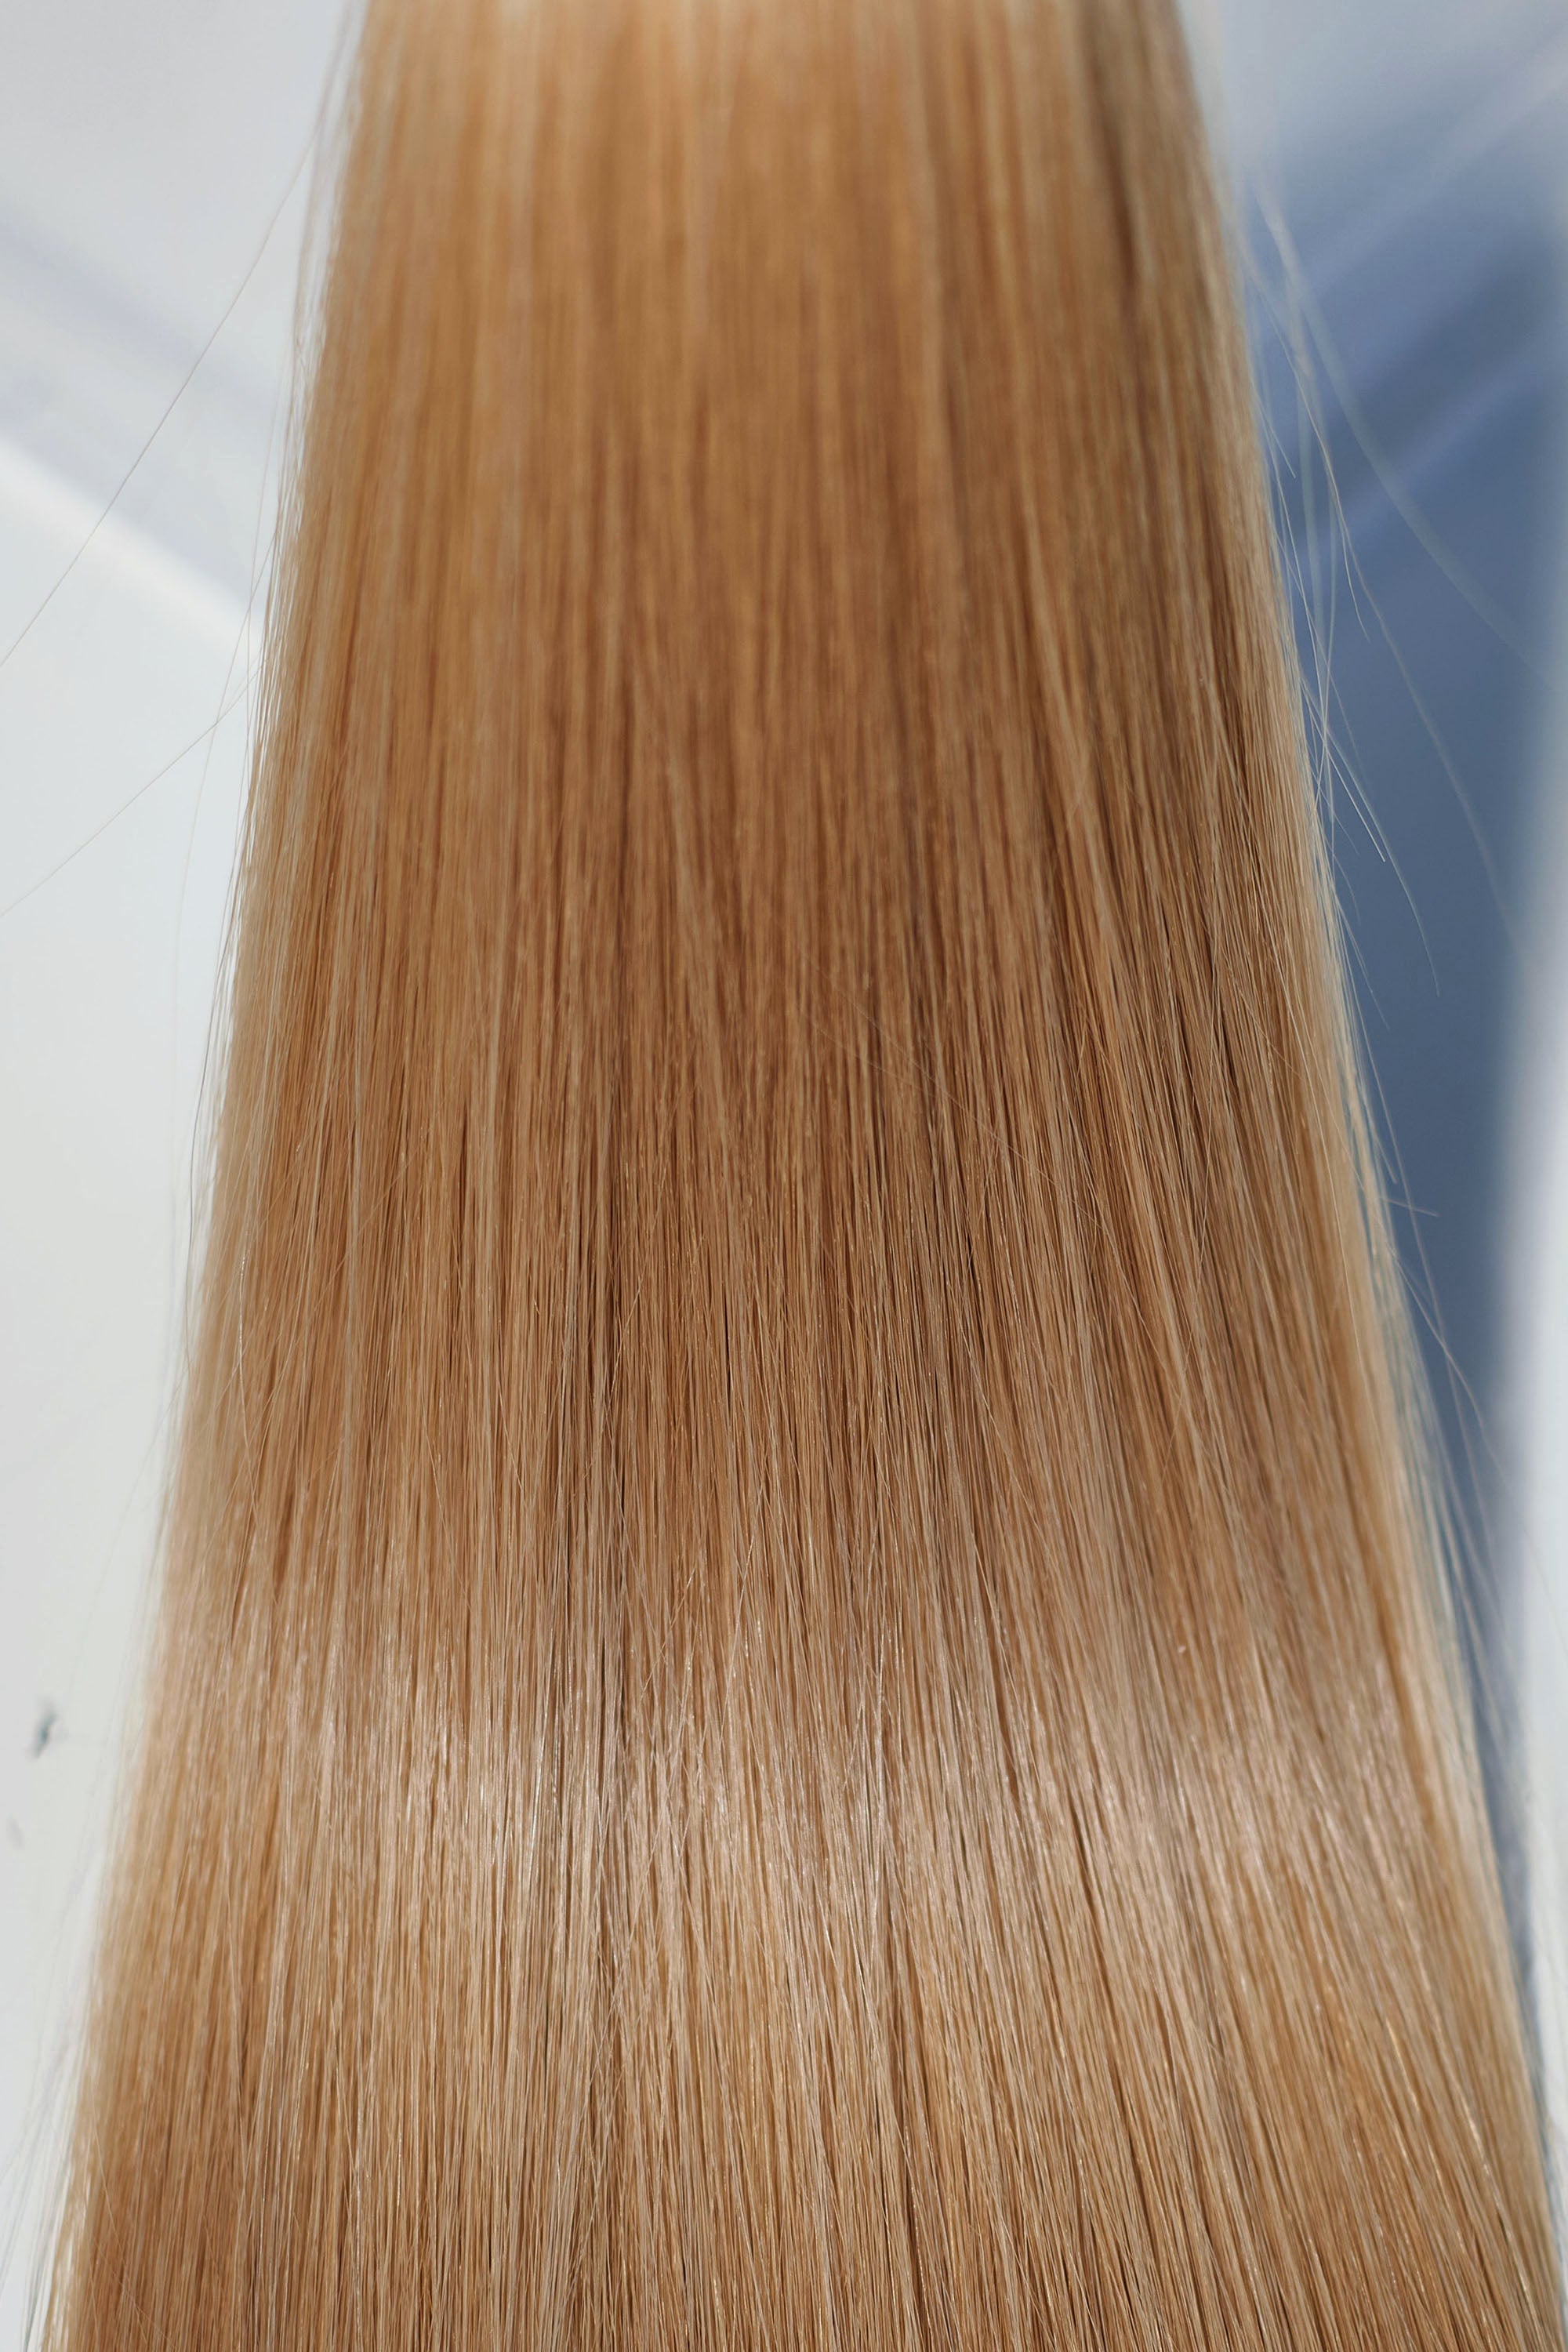 Behair professional Keratin Tip "Premium" 18" (45cm) Natural Straight Gold Sand #18 - 25g (Micro - 0.5g each pcs) hair extensions